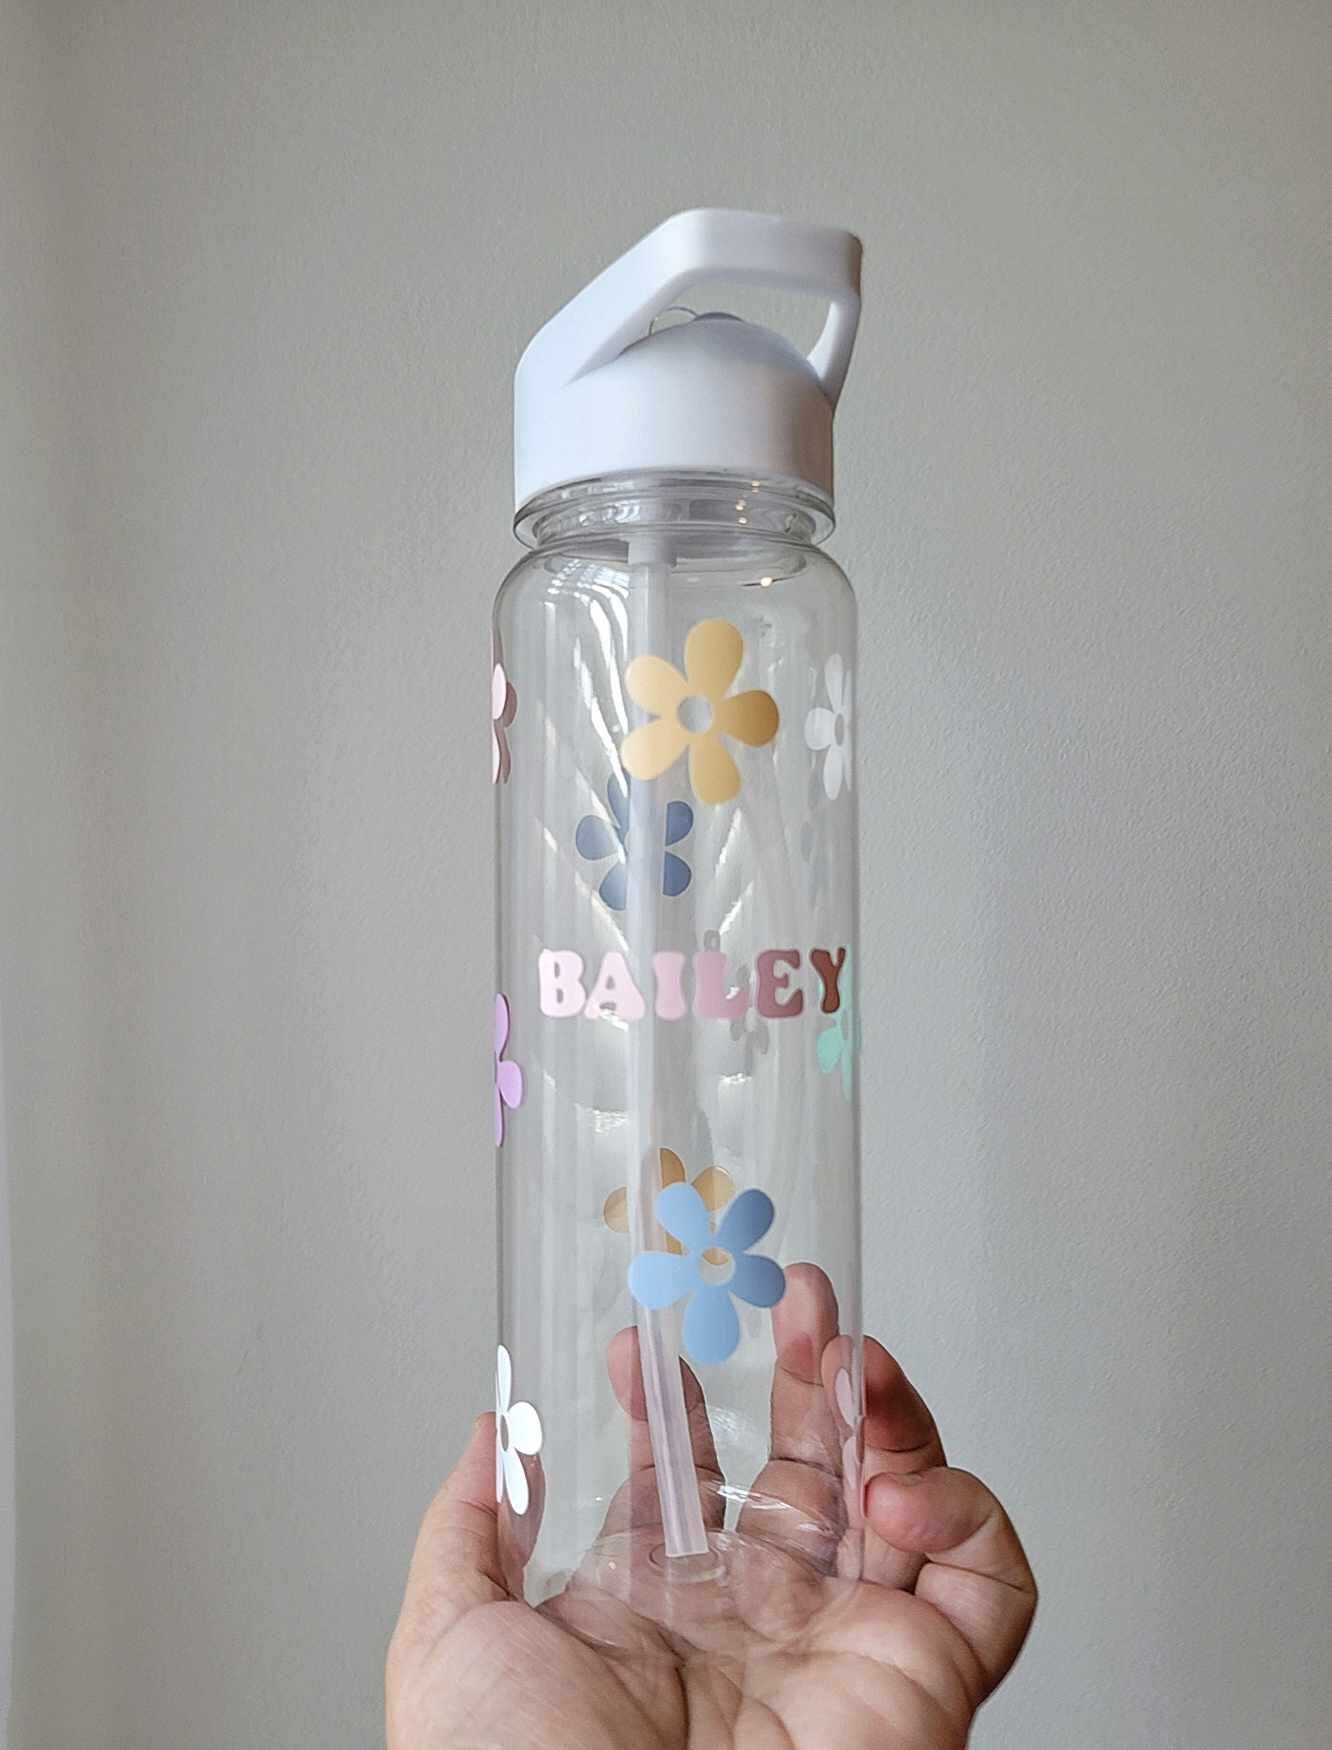 Kawaii Water Bottle for Girls Cute Water Bottles with Straw Portable  Leakproof Drinking Bottle Water Jug for School, 24 oz (Pink)